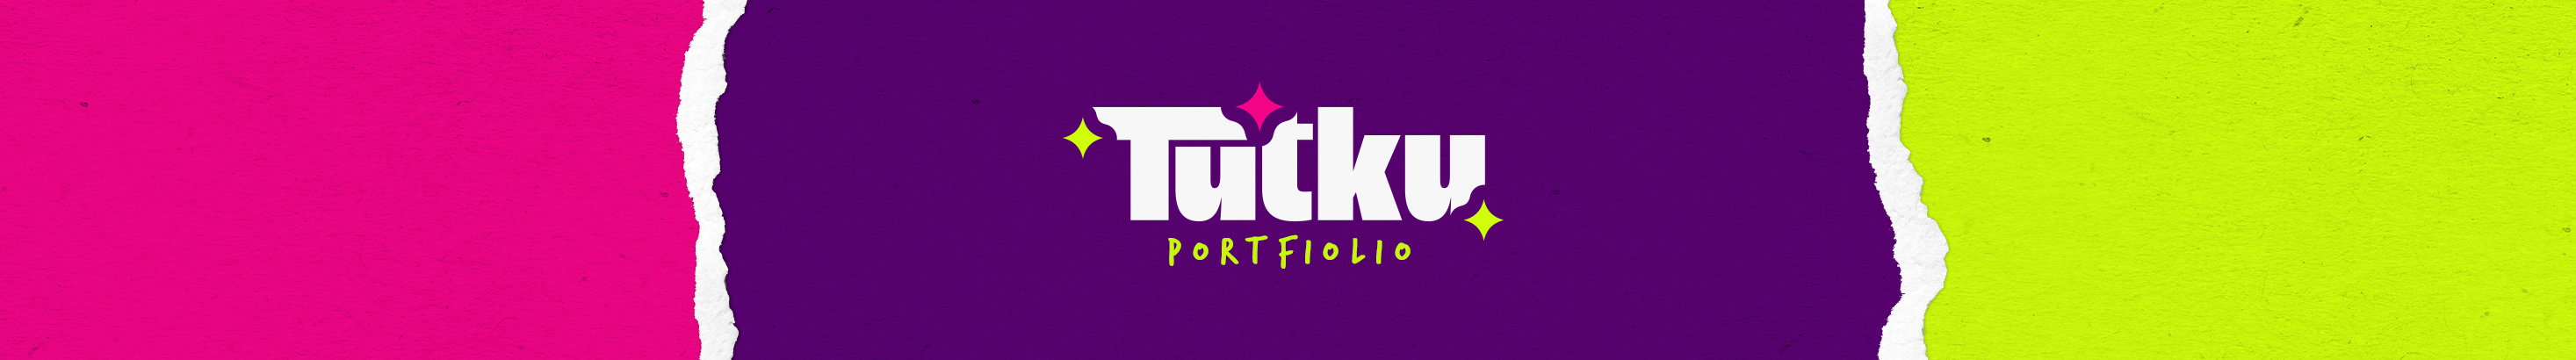 Tutku Binkut's profile banner